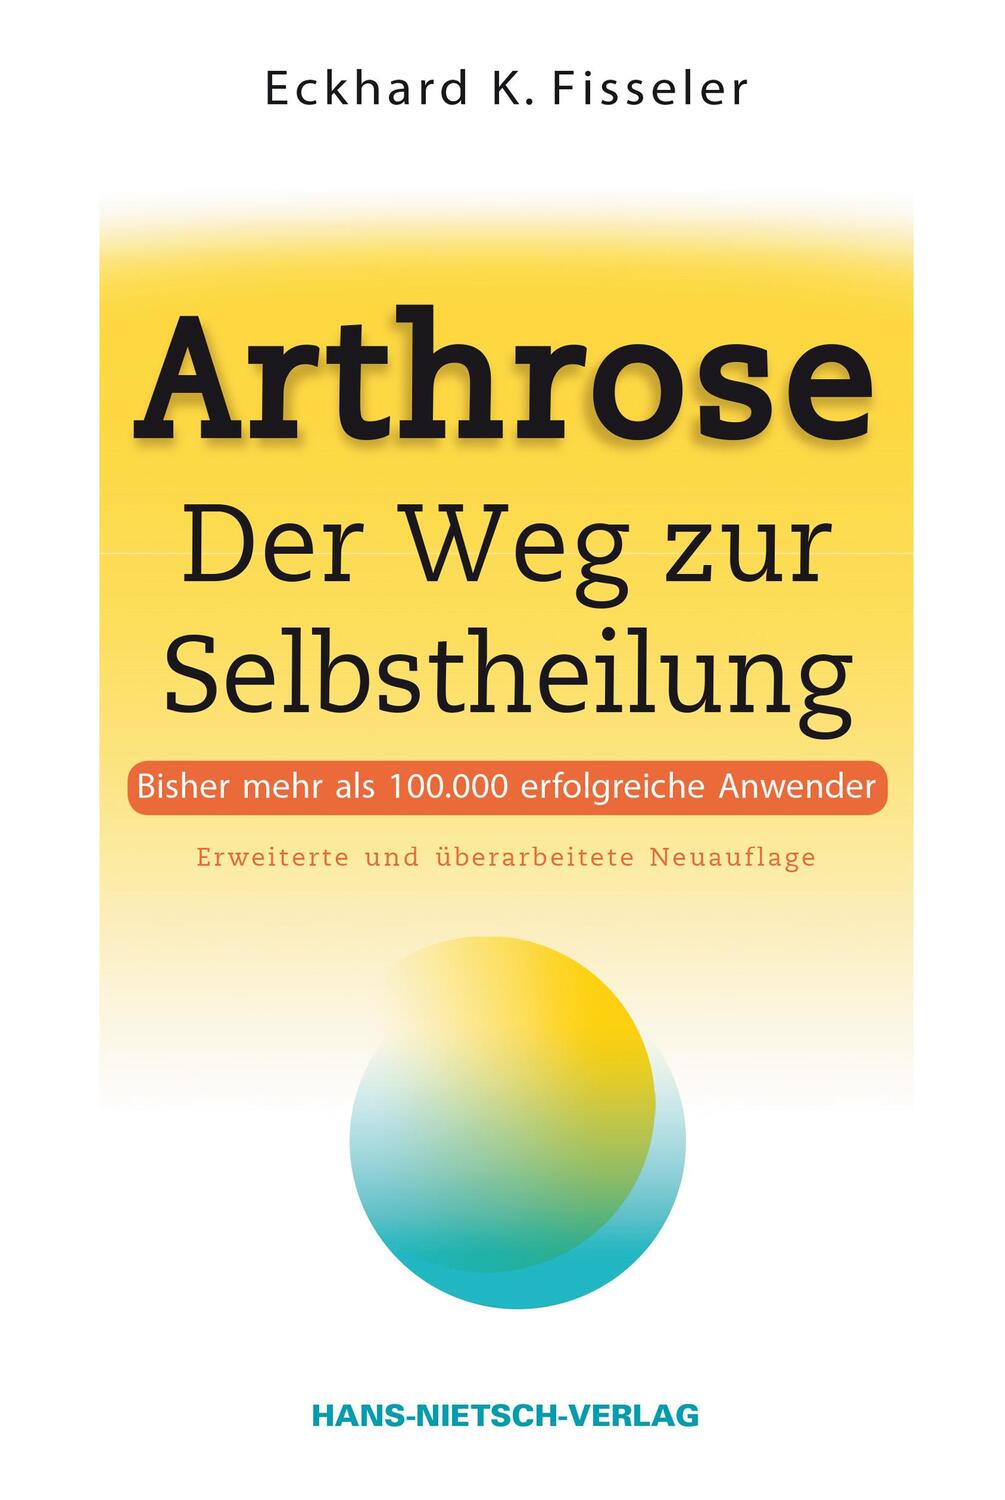 Arthrose - Der Weg zur Selbstheilung - Fisseler, Eckhard K.